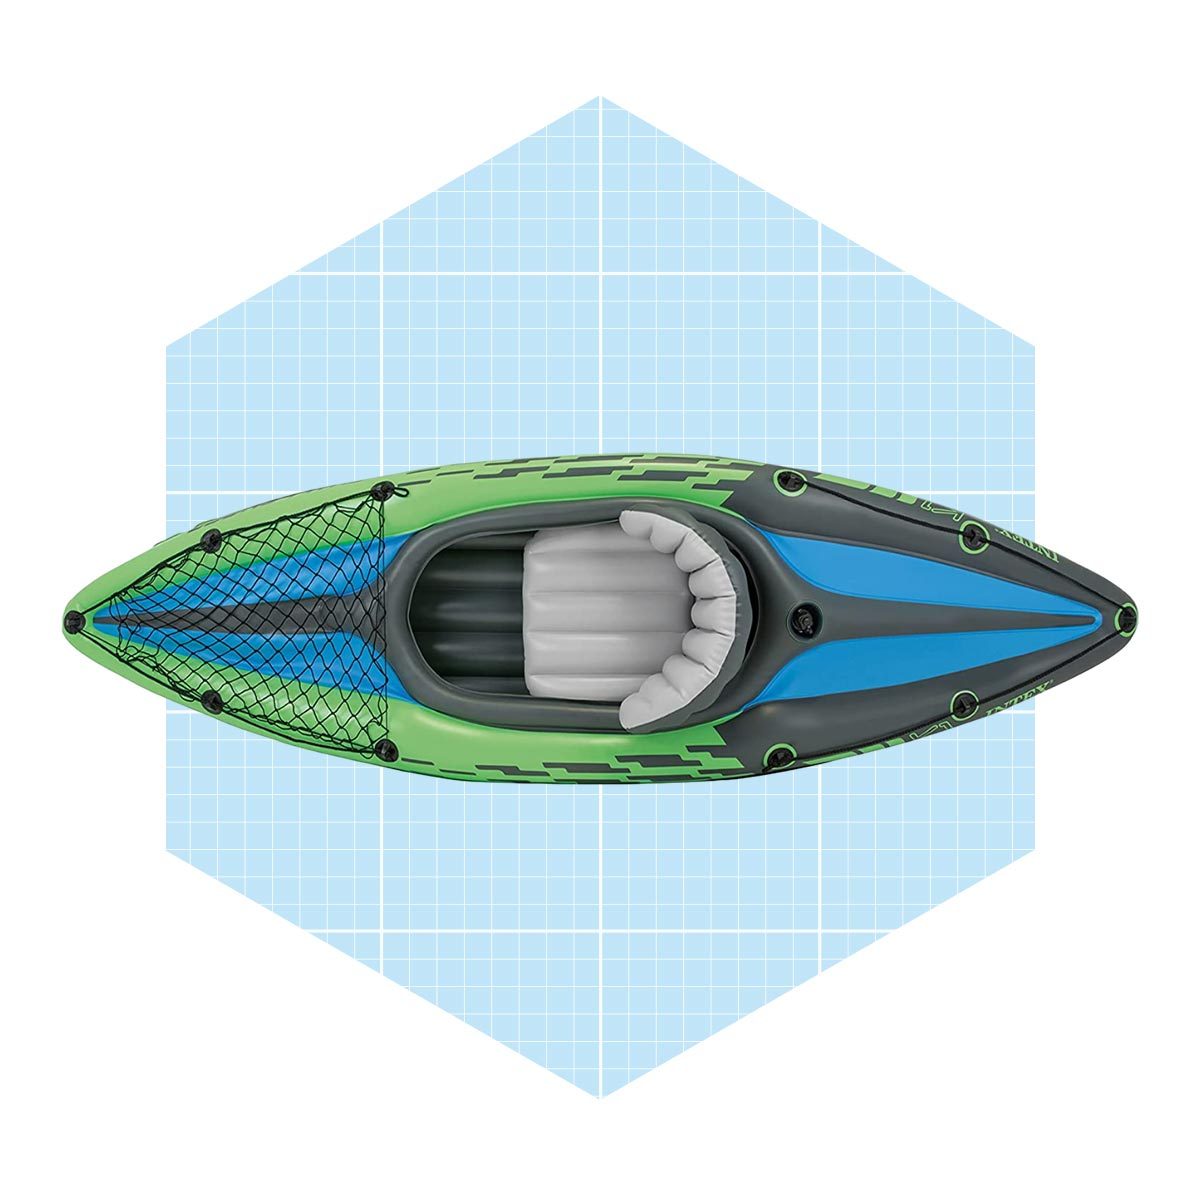 The Challenger Inflatable Kayak